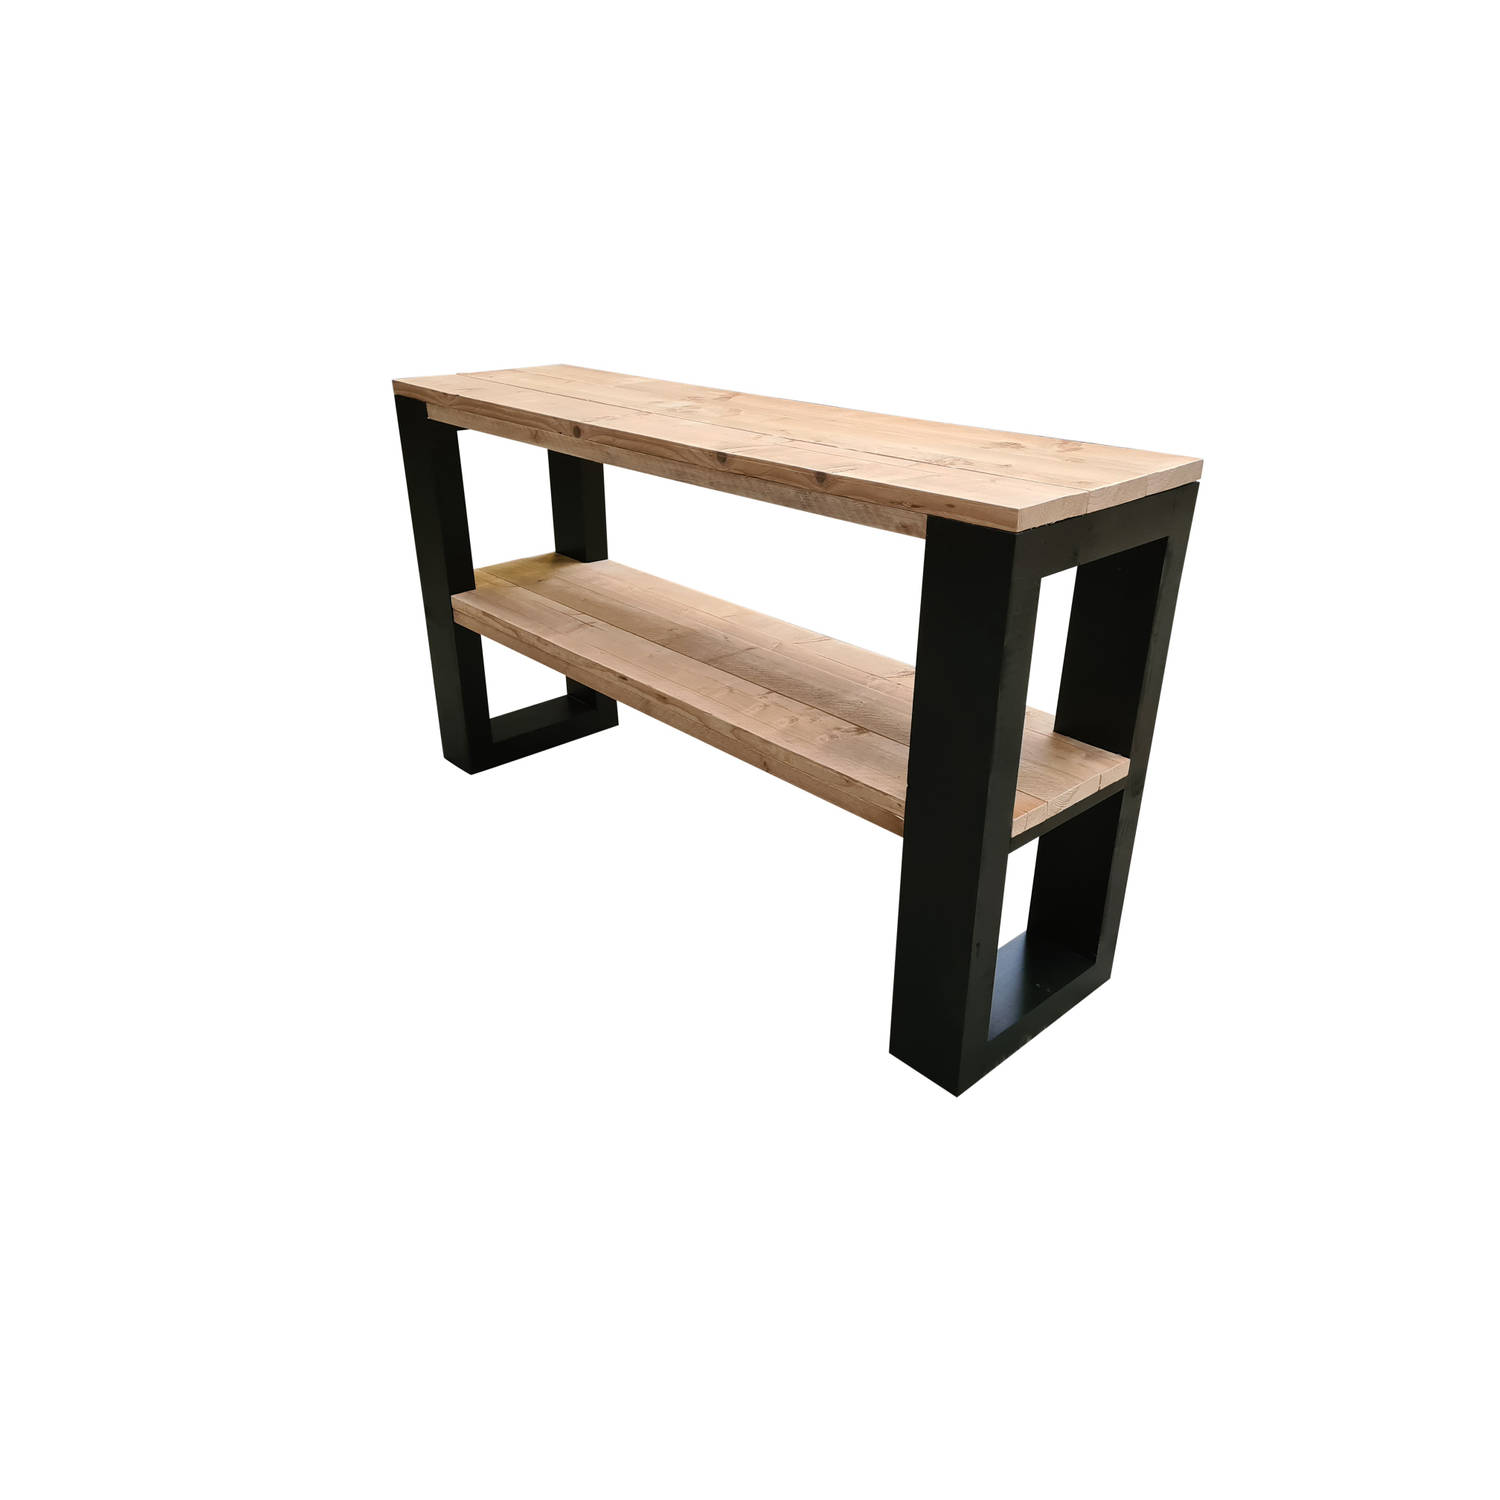 Wood4you Side Table New Orleans Steigerhout 160lx78hx38d Cm Zwart